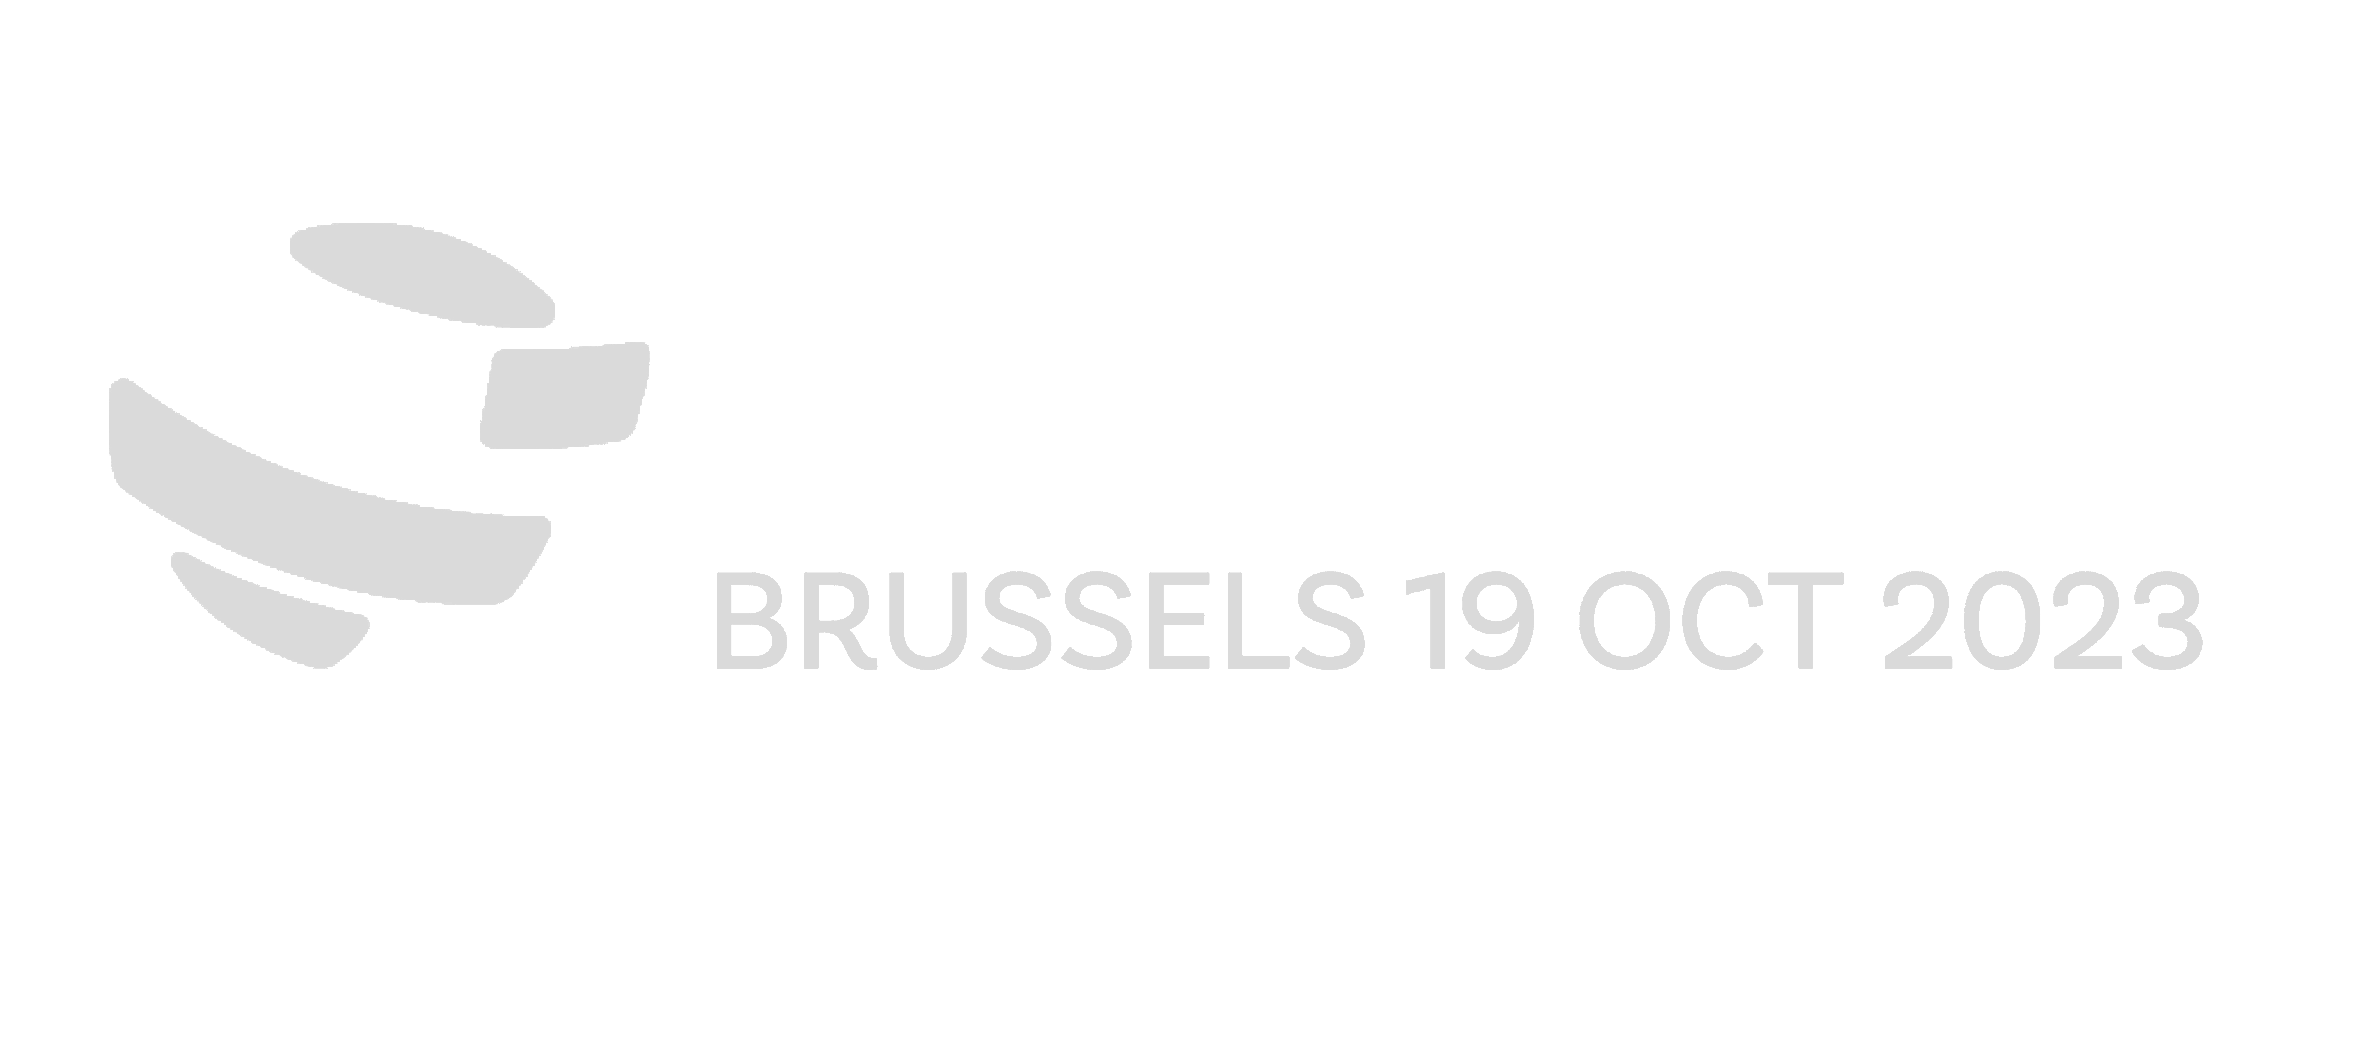 IIA Belgium Conference logo in black & white